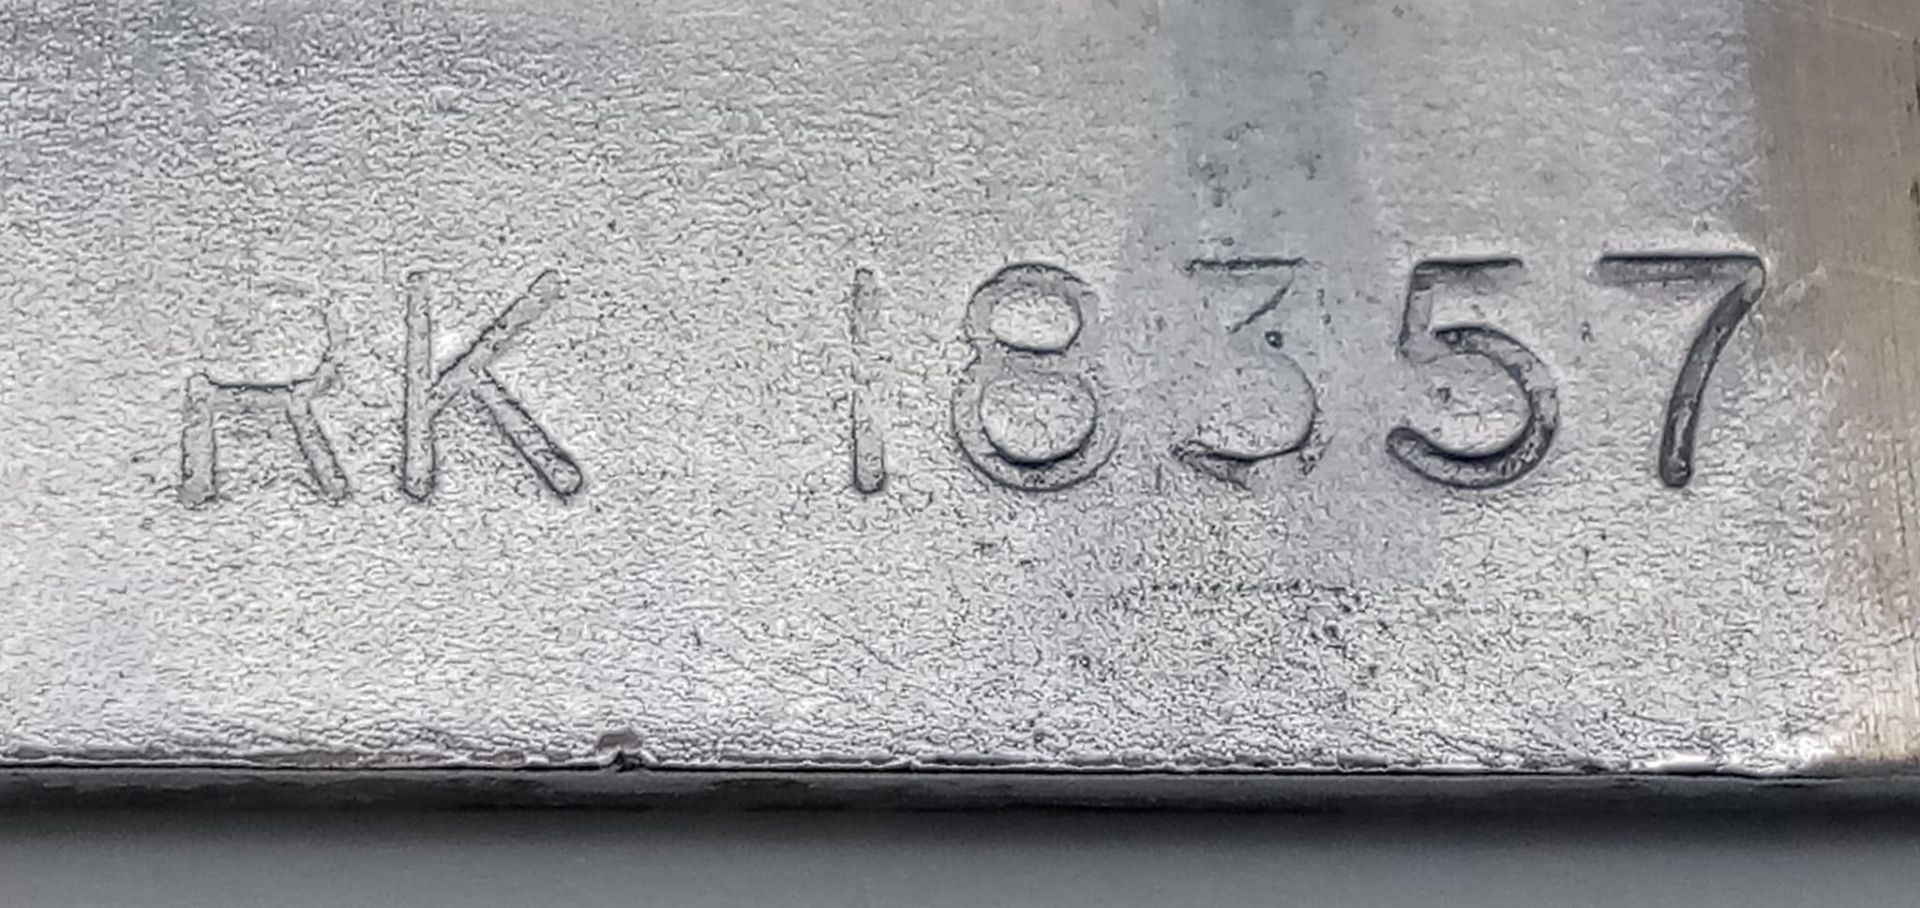 A Genuine Rolls Royce Car White Metal and Enamel Badge. Markings for RK 18357. 11cm x 7cm. - Image 3 of 3